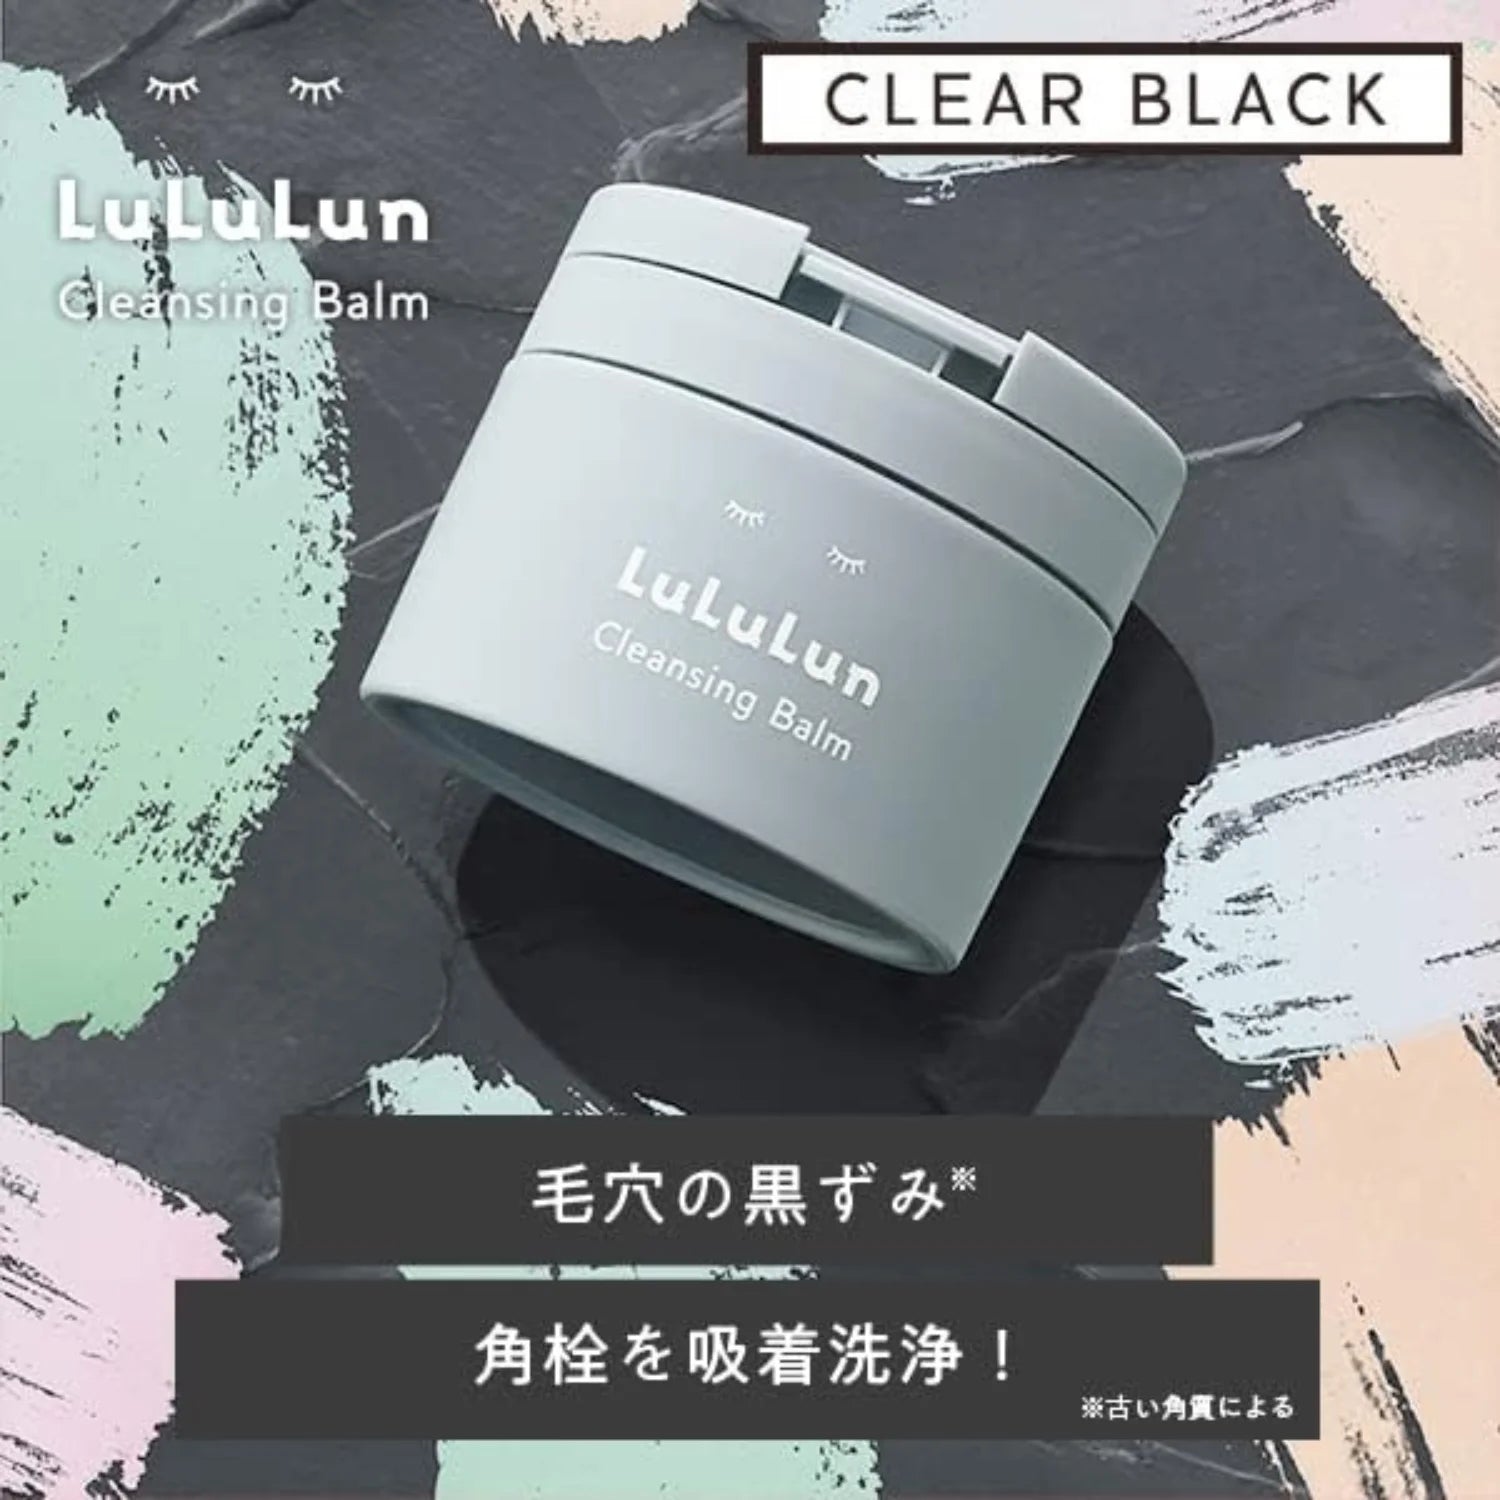 LuLuLun Cleansing Balm Clear Black 90g - Buy Me Japan